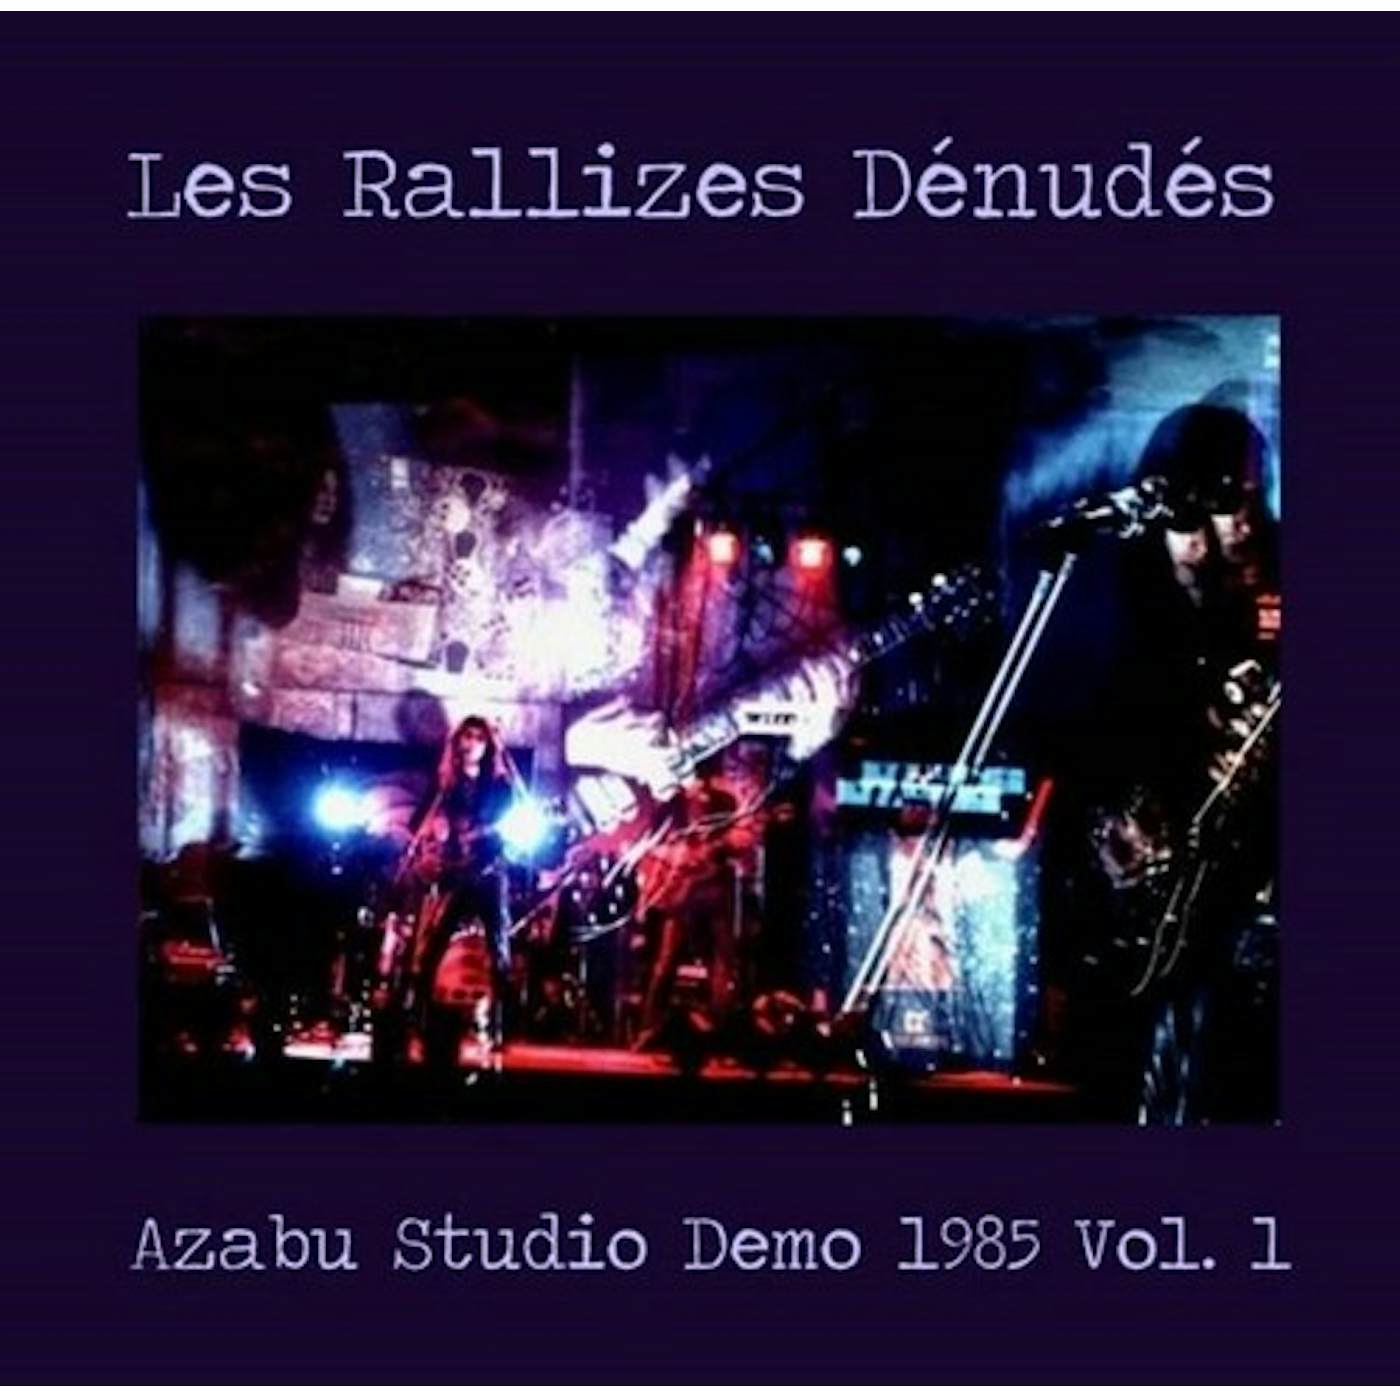 Les Rallizes Dénudés AZABU STUDIO DEMO 1985 VOL 1 Vinyl Record